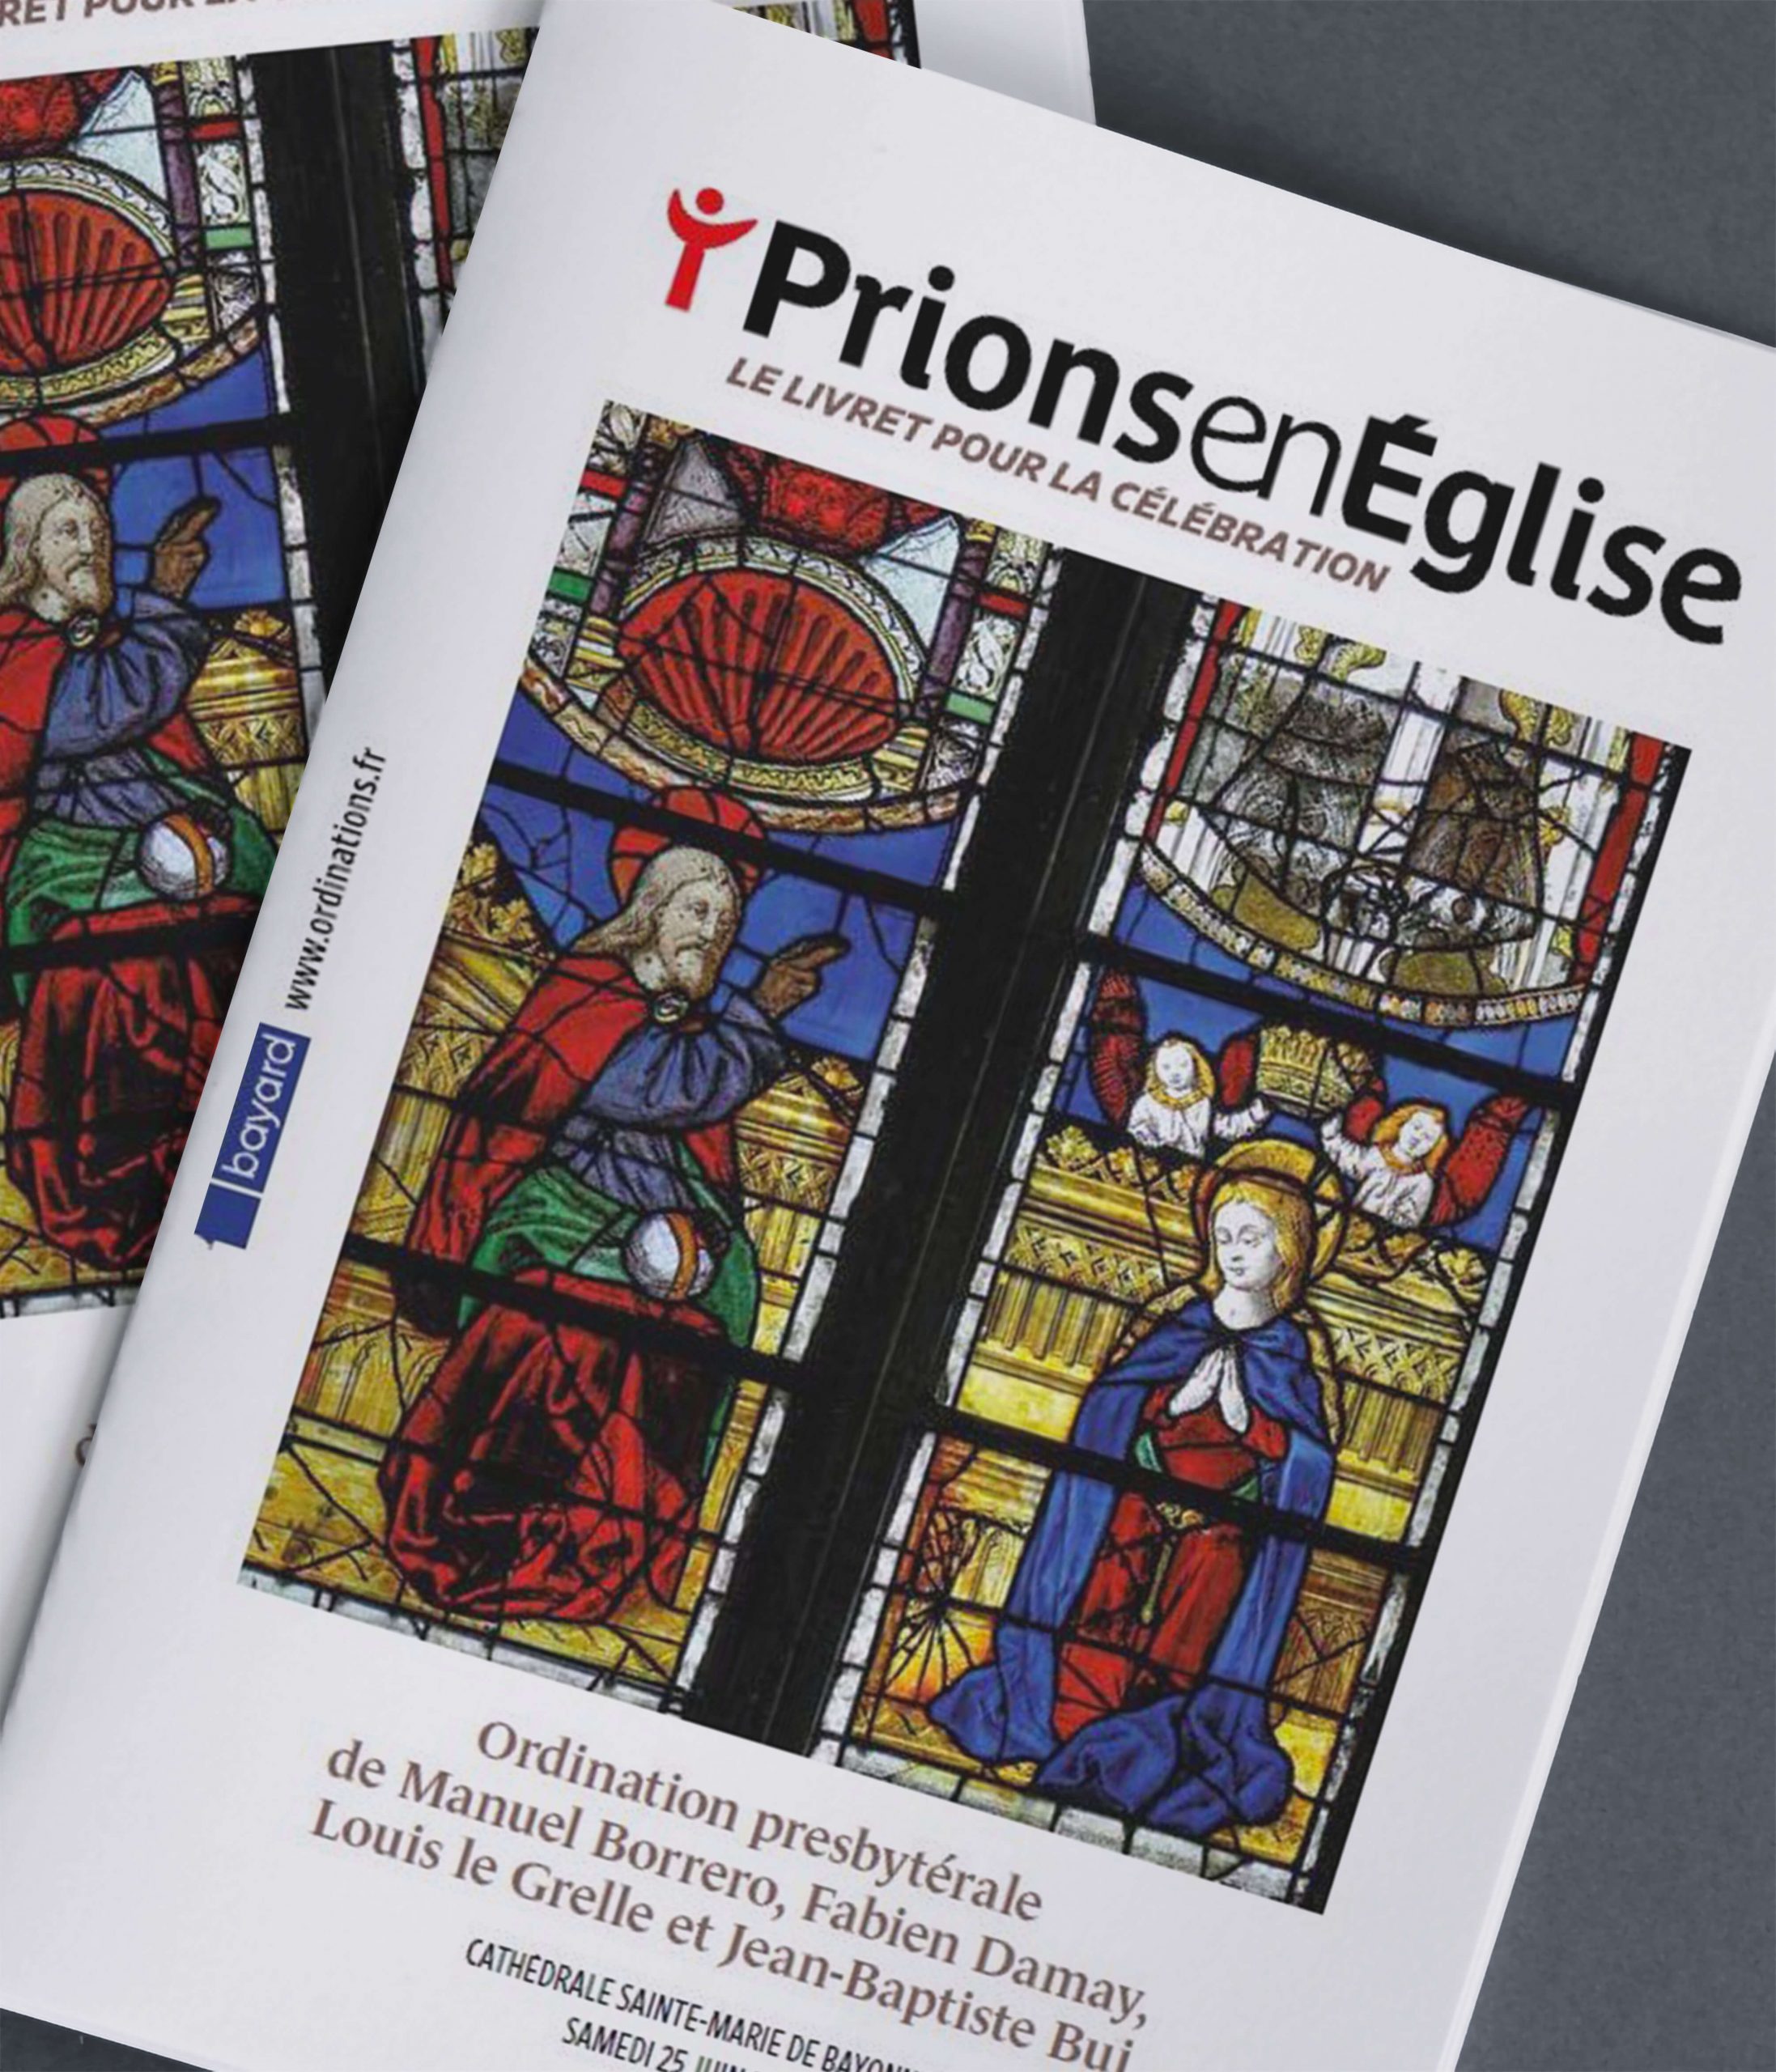 Ordination presbytérale de Manuel Borrero, Fabien Damay, Louis le Grelle et Jean-Baptiste Bui